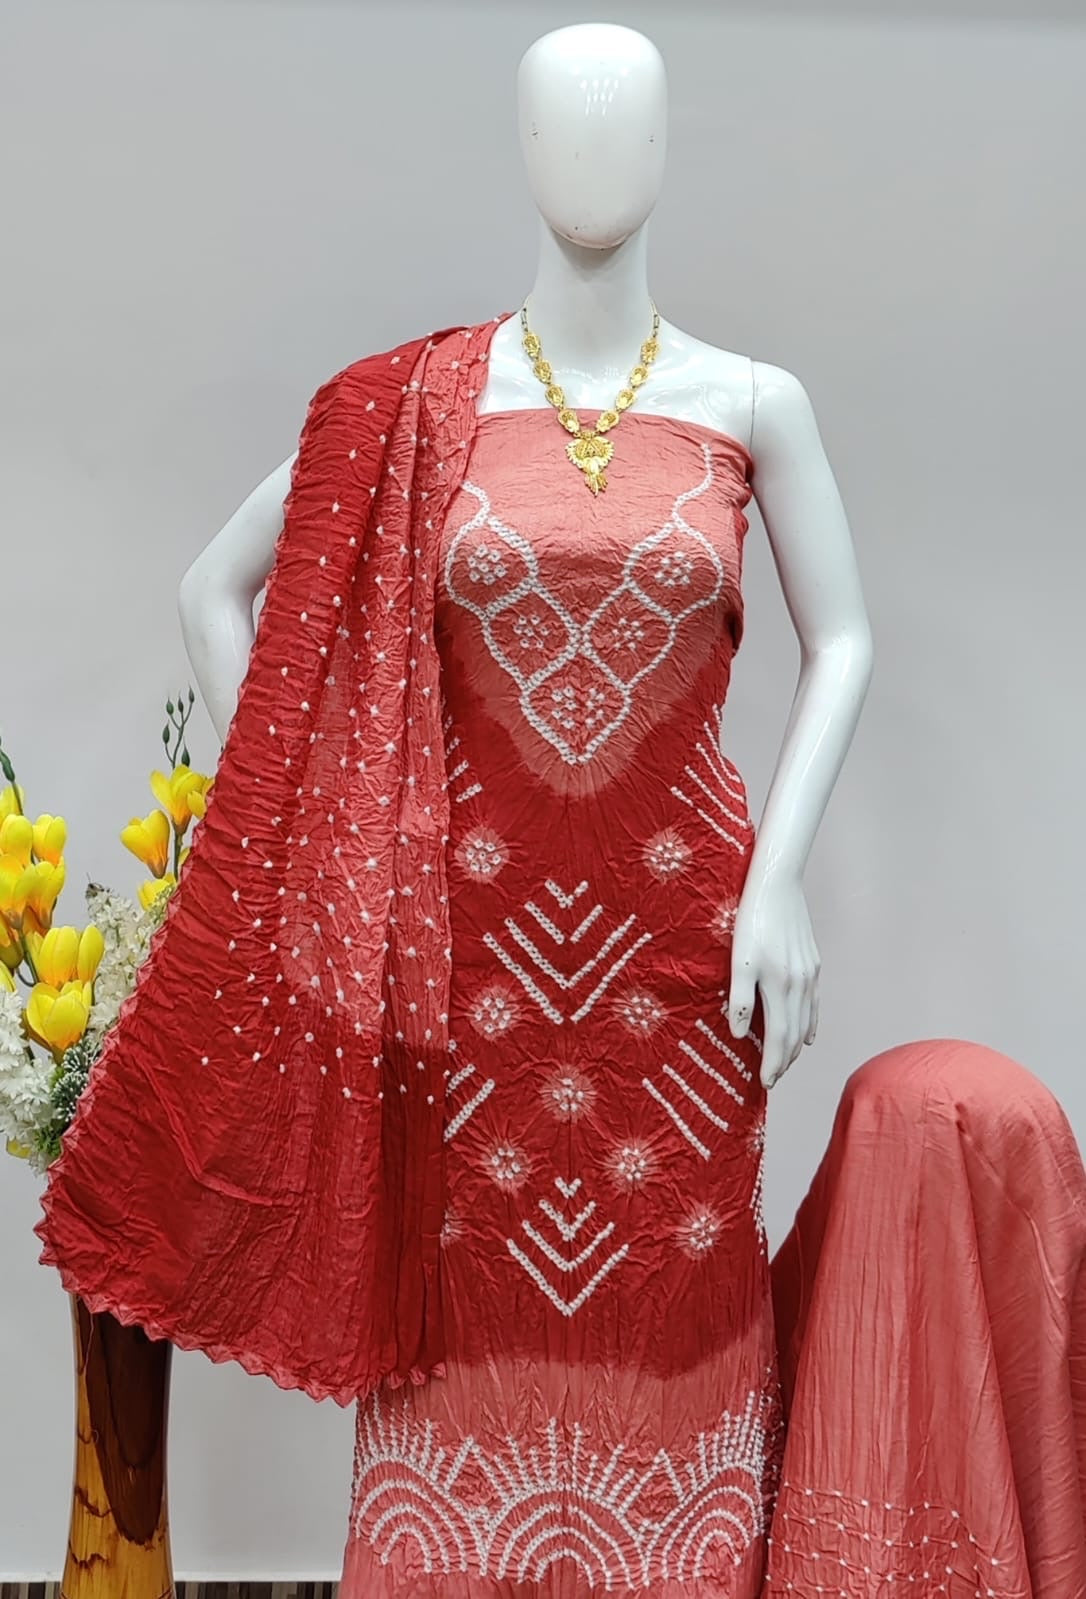 deeptex batik plus vol 9 cotton patiyala dress materials collection -  Krishna Creation | Patiyala dress, Dress materials, Bandhani dress pattern